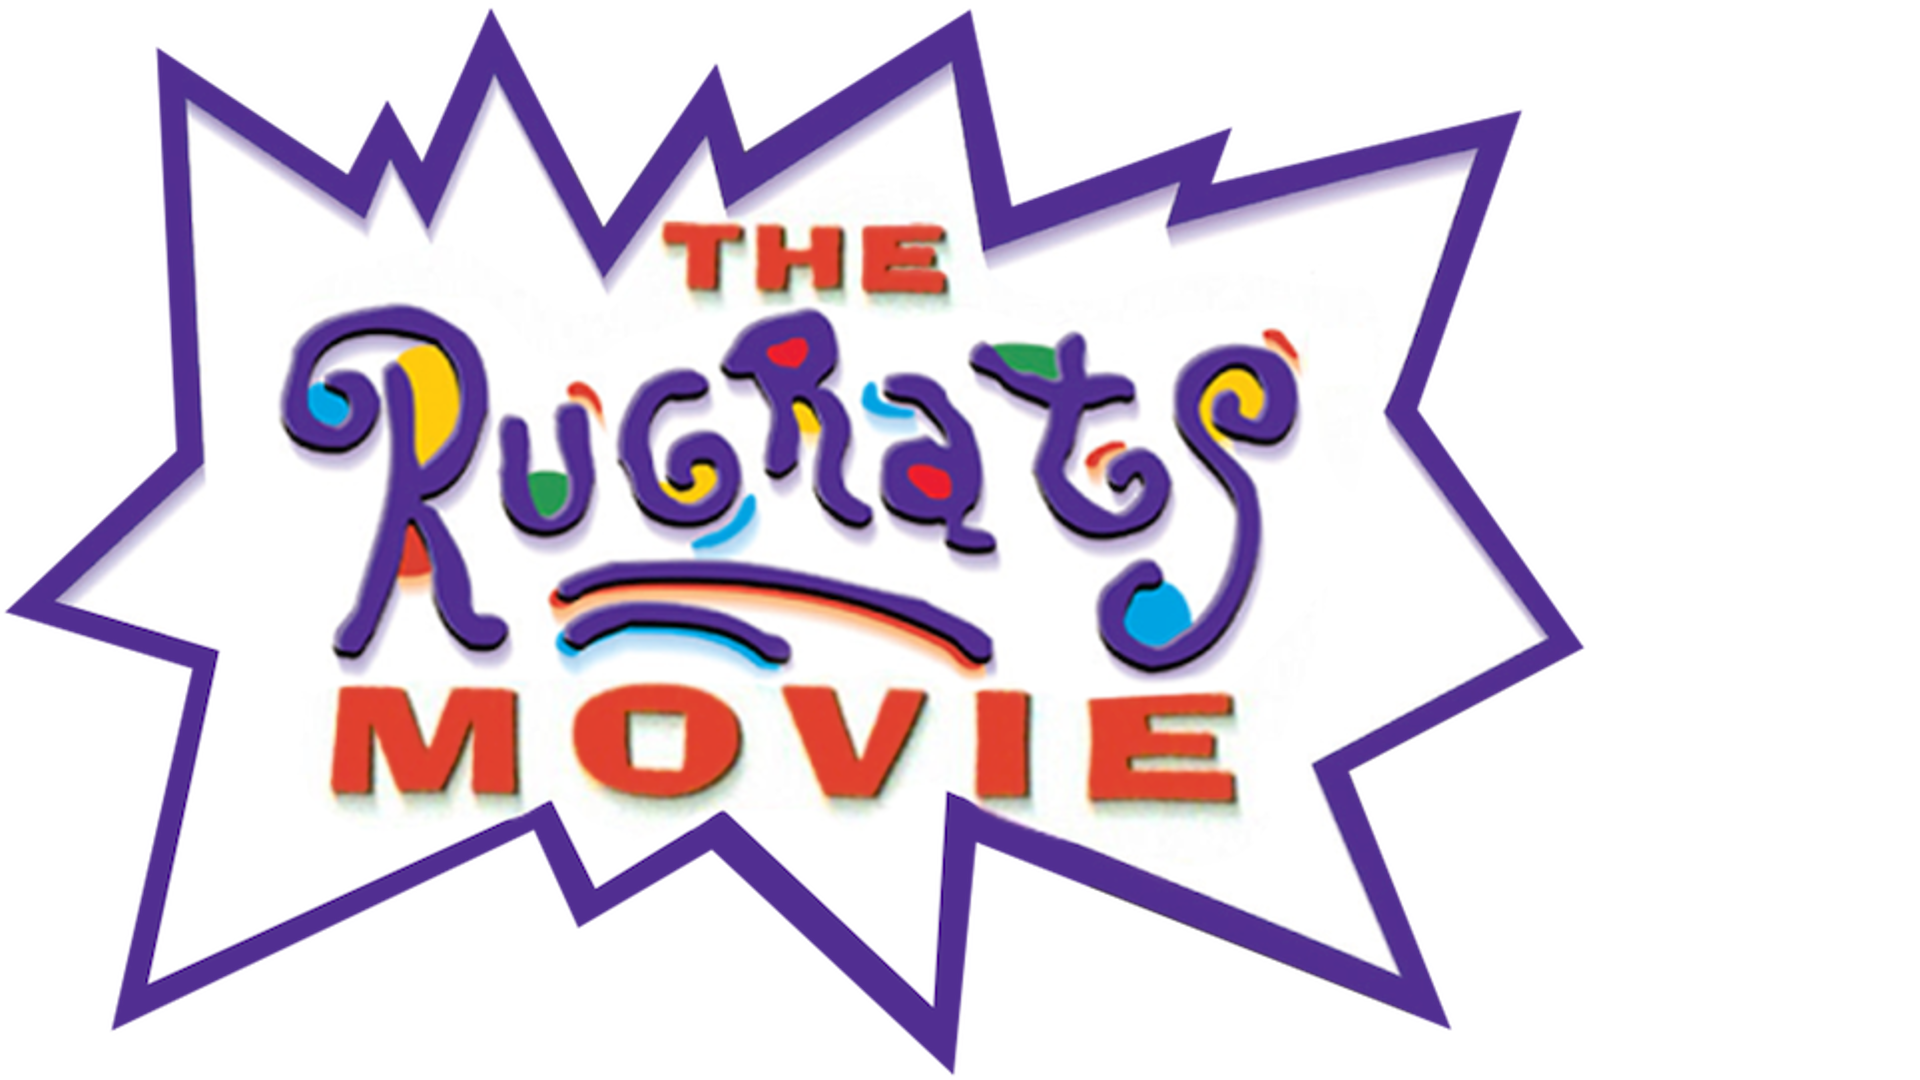 The Rugrats Movie 1998 Logo By J0j0999ozman On Deviantart